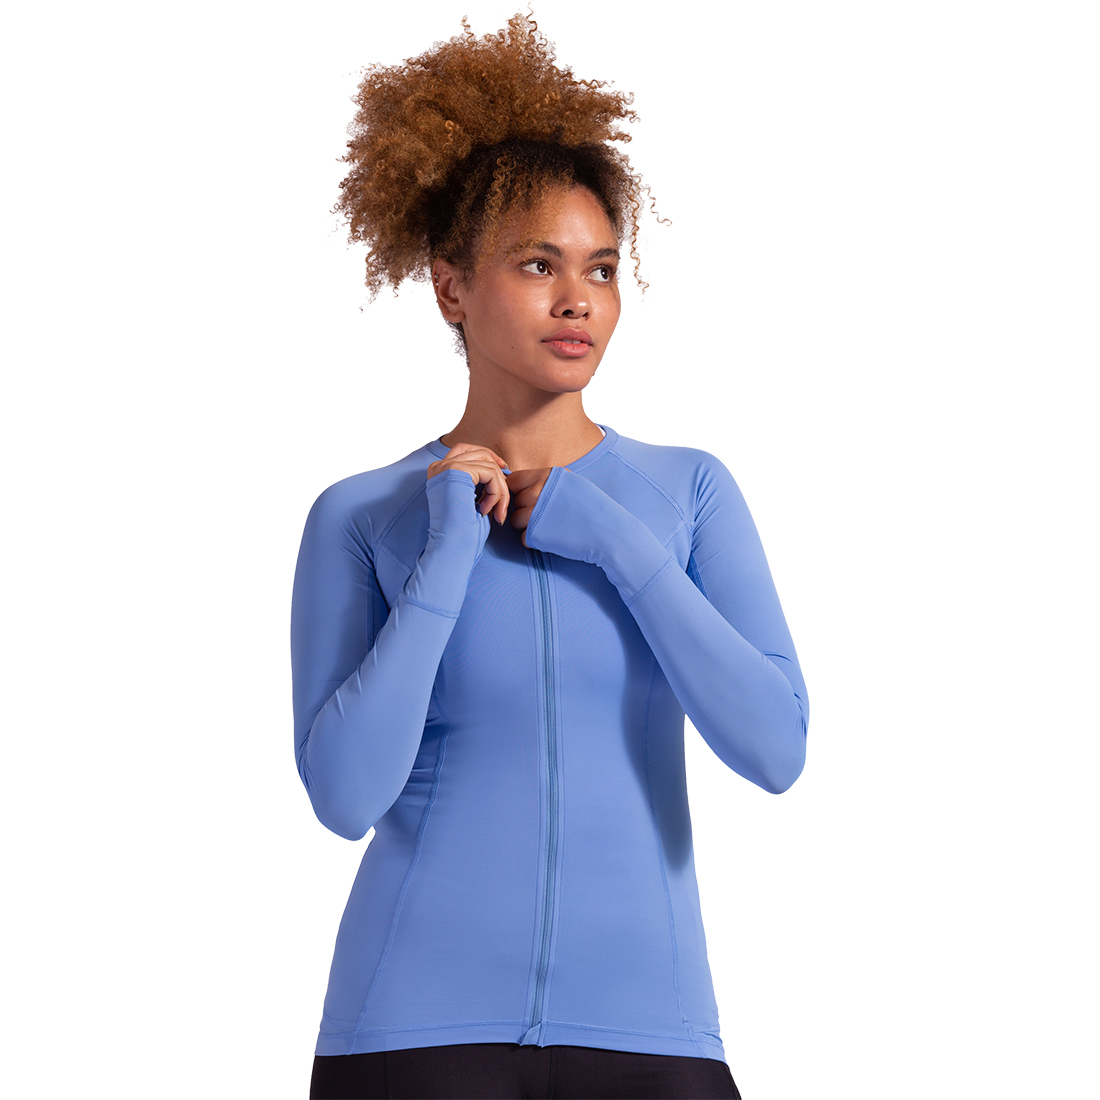 BloqUV Women's Sun Protective Full Zip Long Sleeve Athletic Top (Indigo)